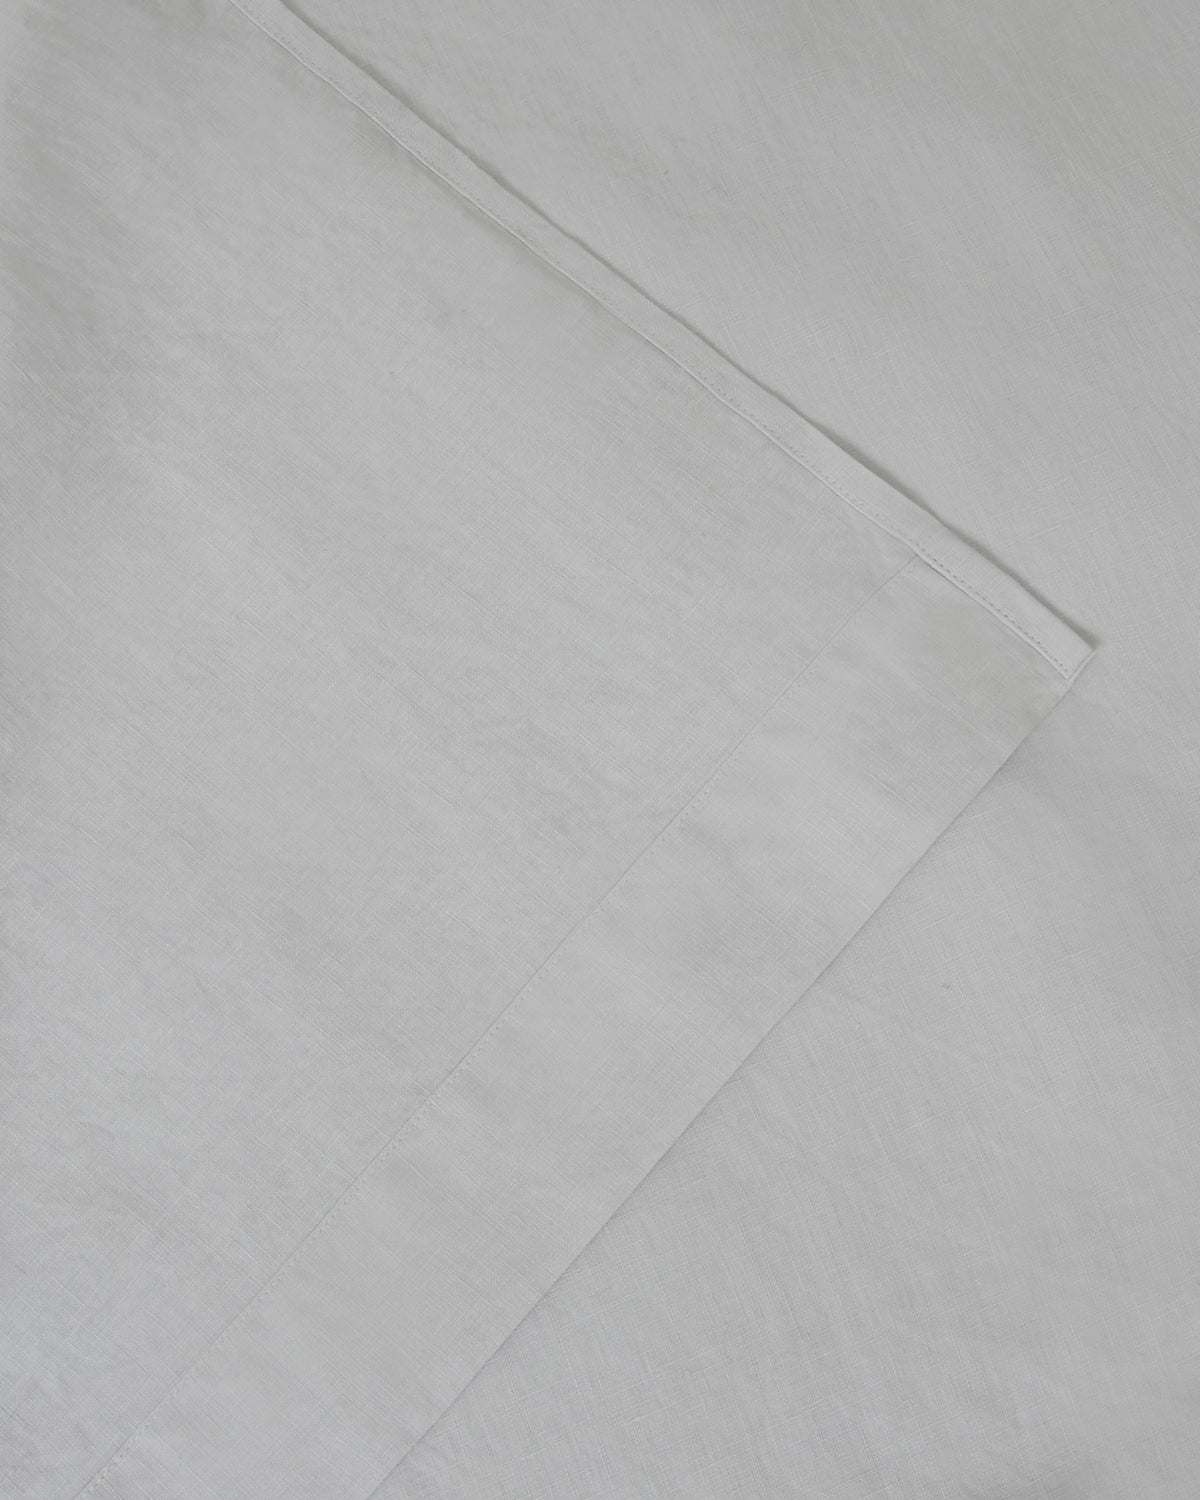 Linen sheets collection set in a light blue glacier color